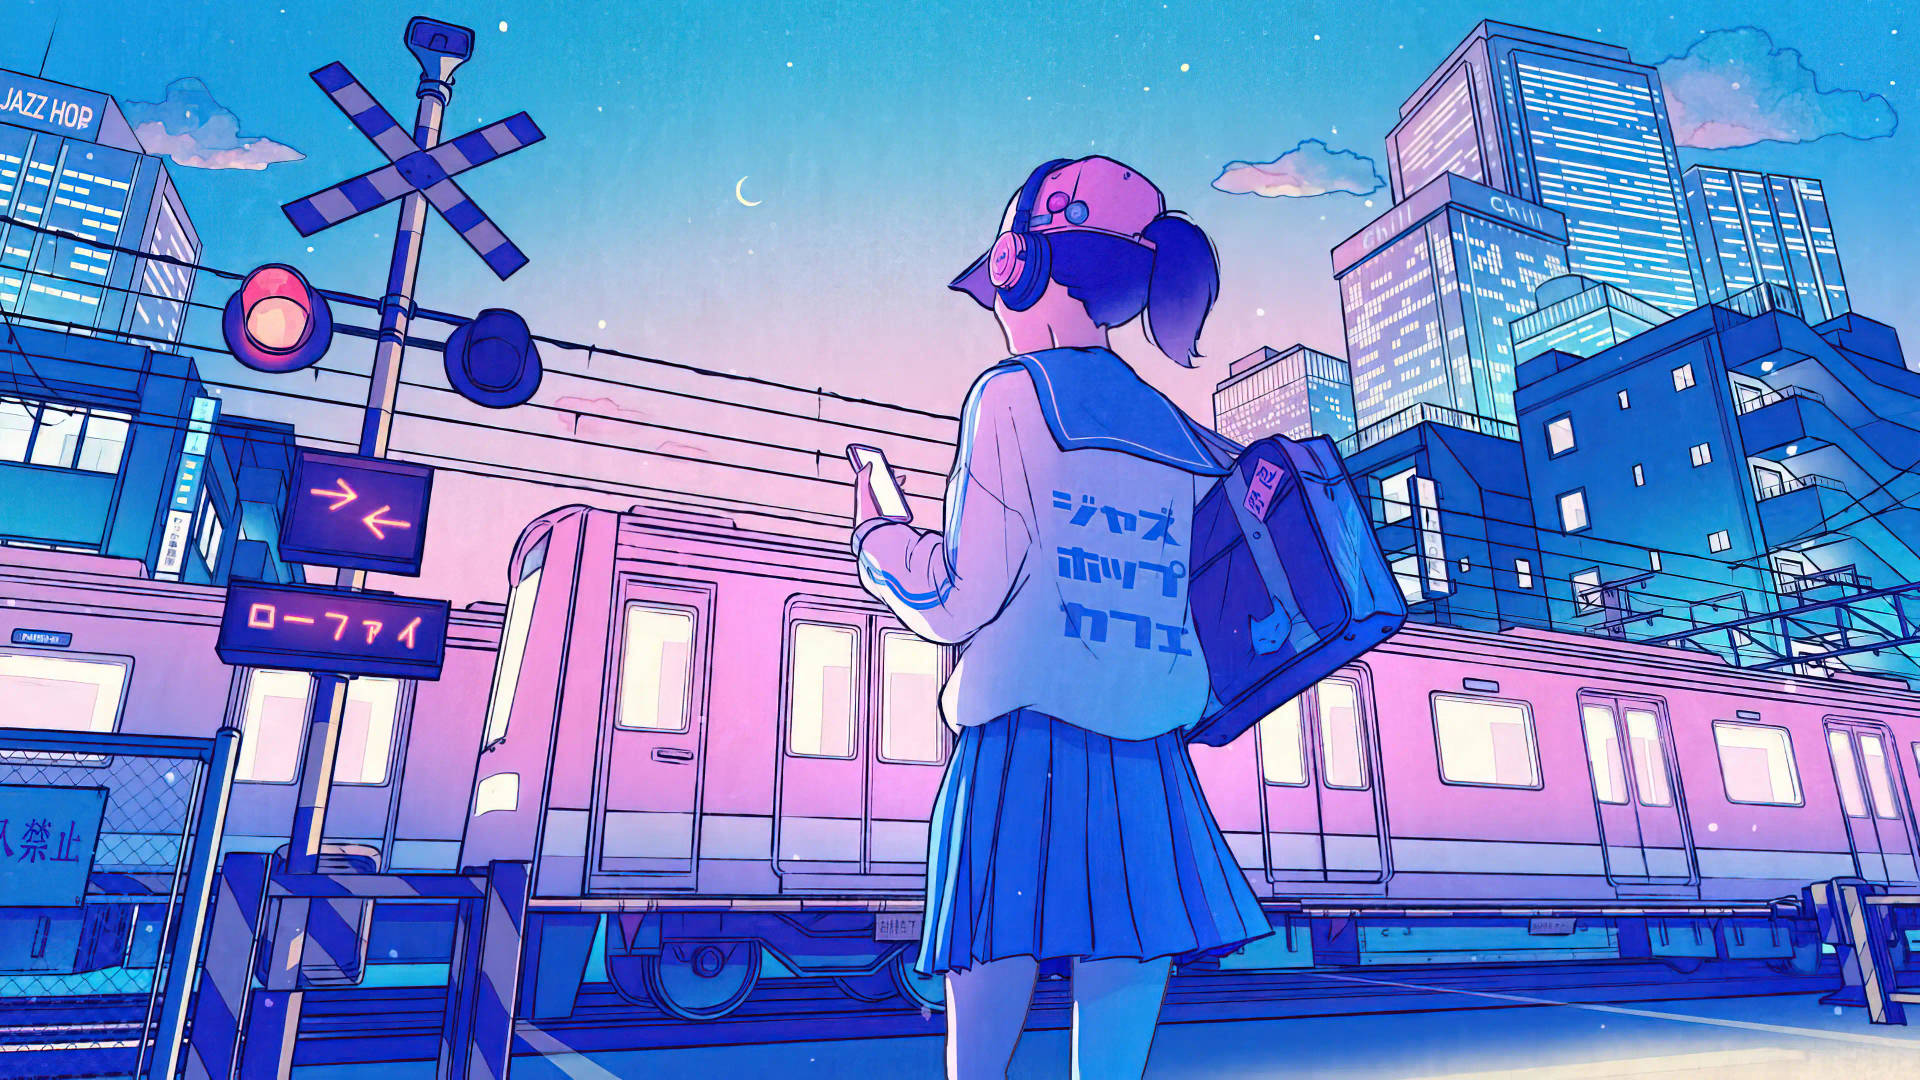 Neon Aesthetic Anime City Background